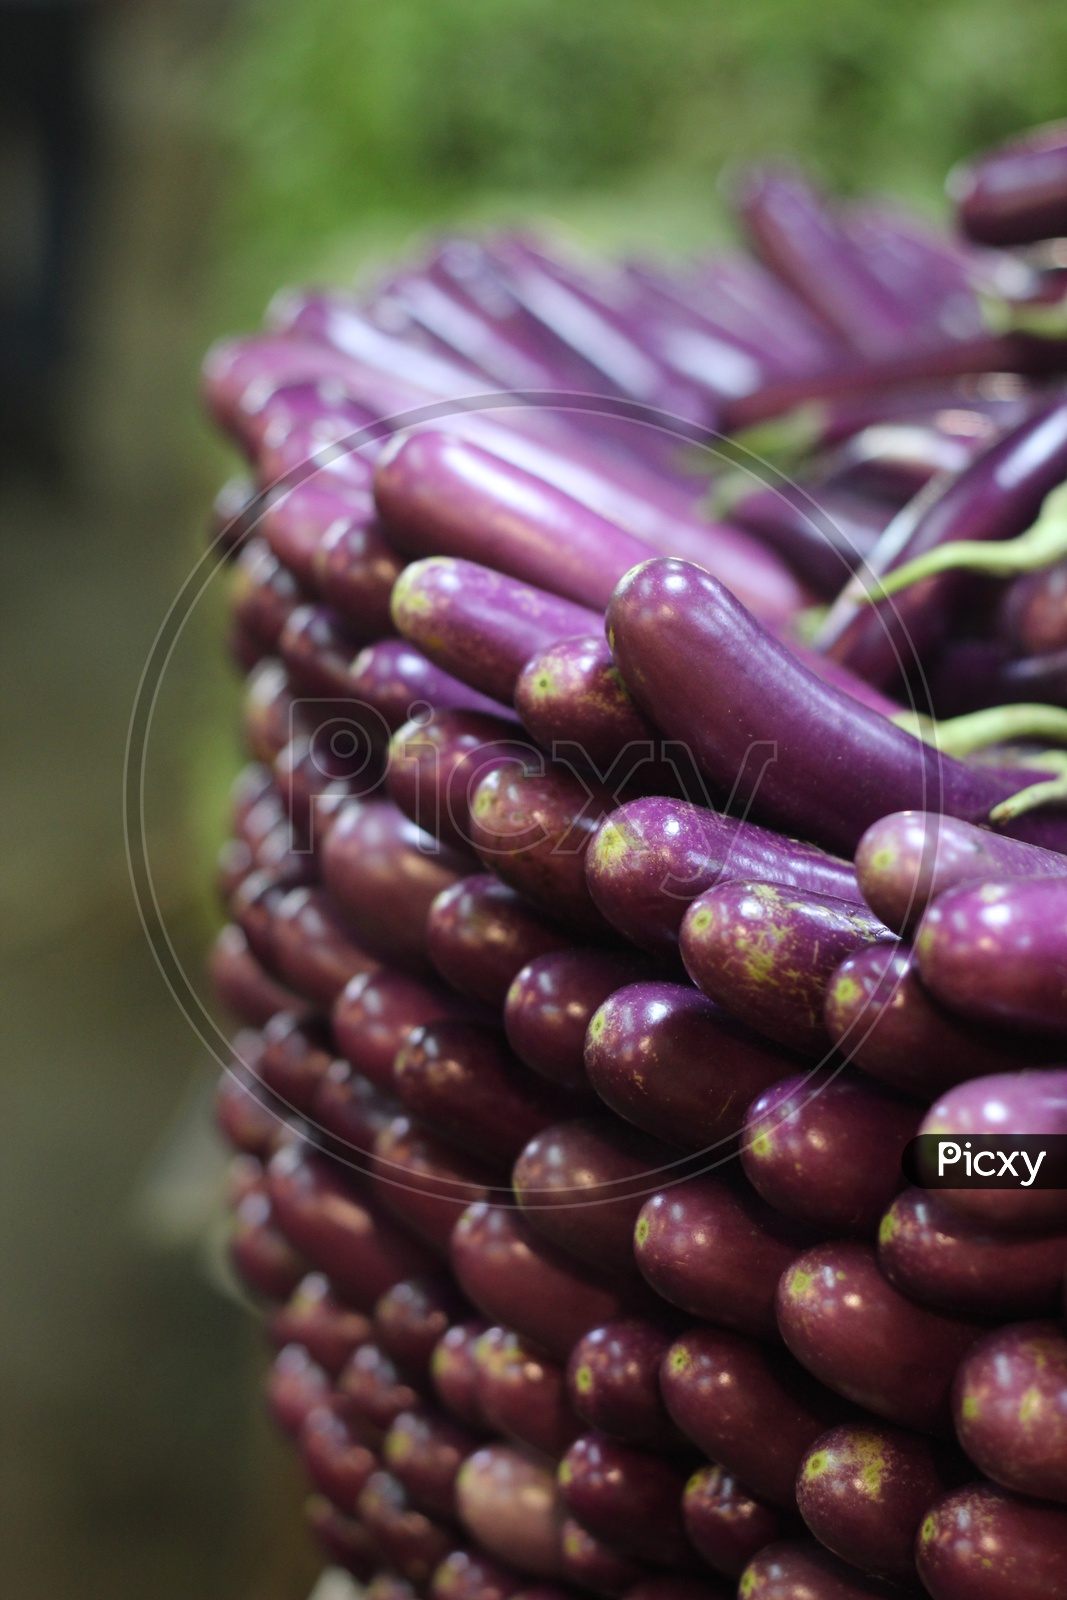 Purple Brinjal at Vegetable Market